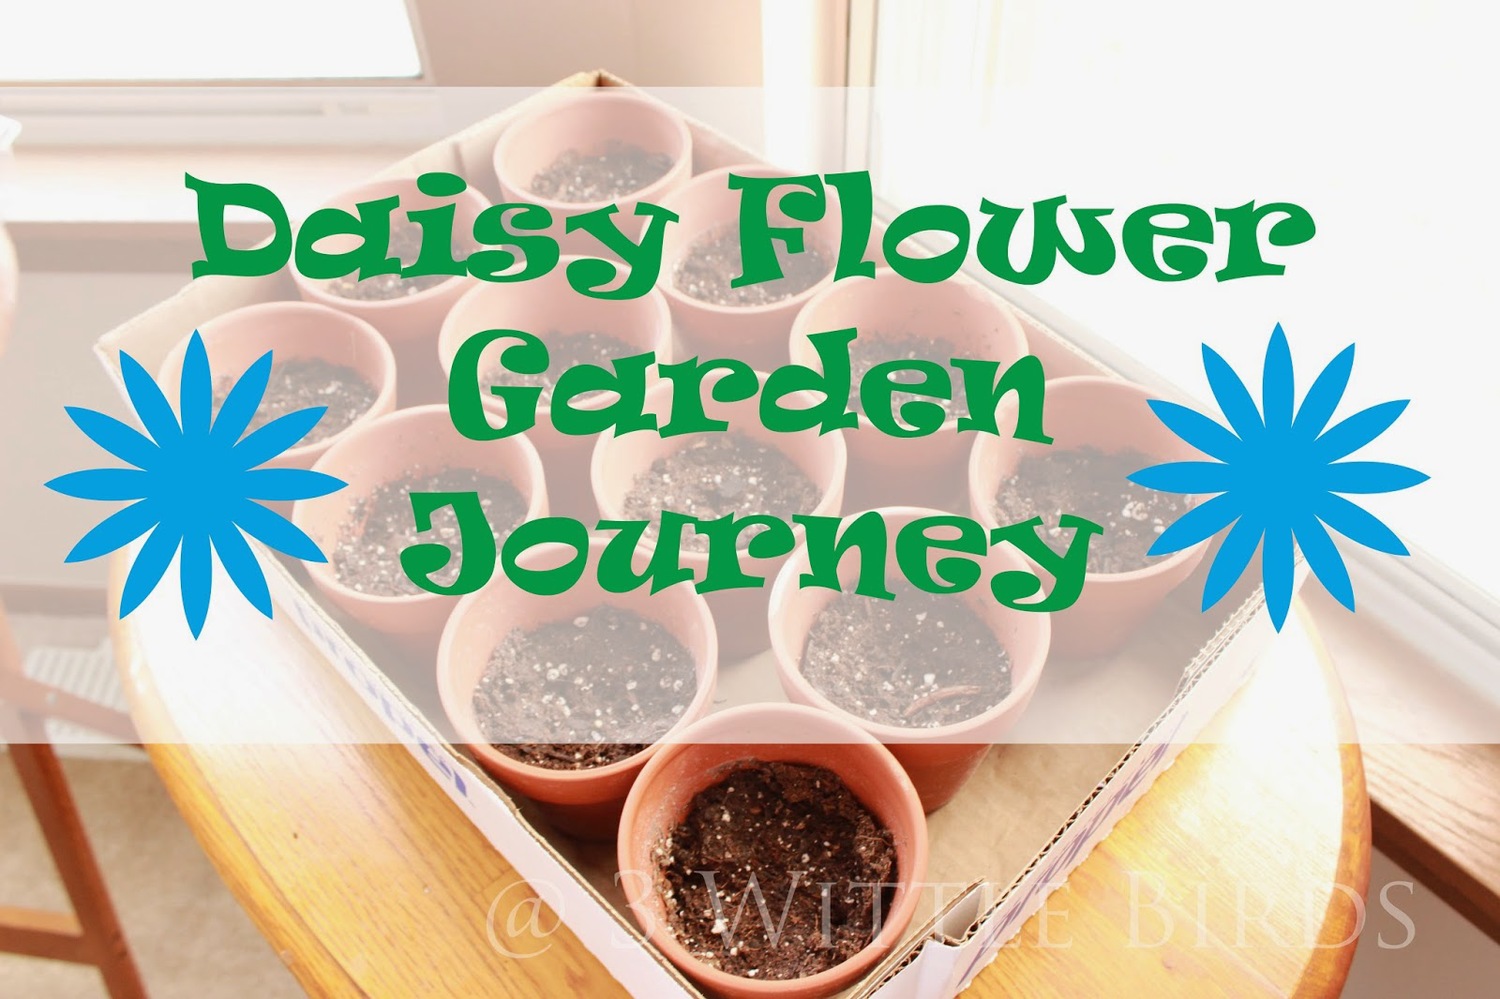 daisy flower garden journey: session 1 - mighty girls rock